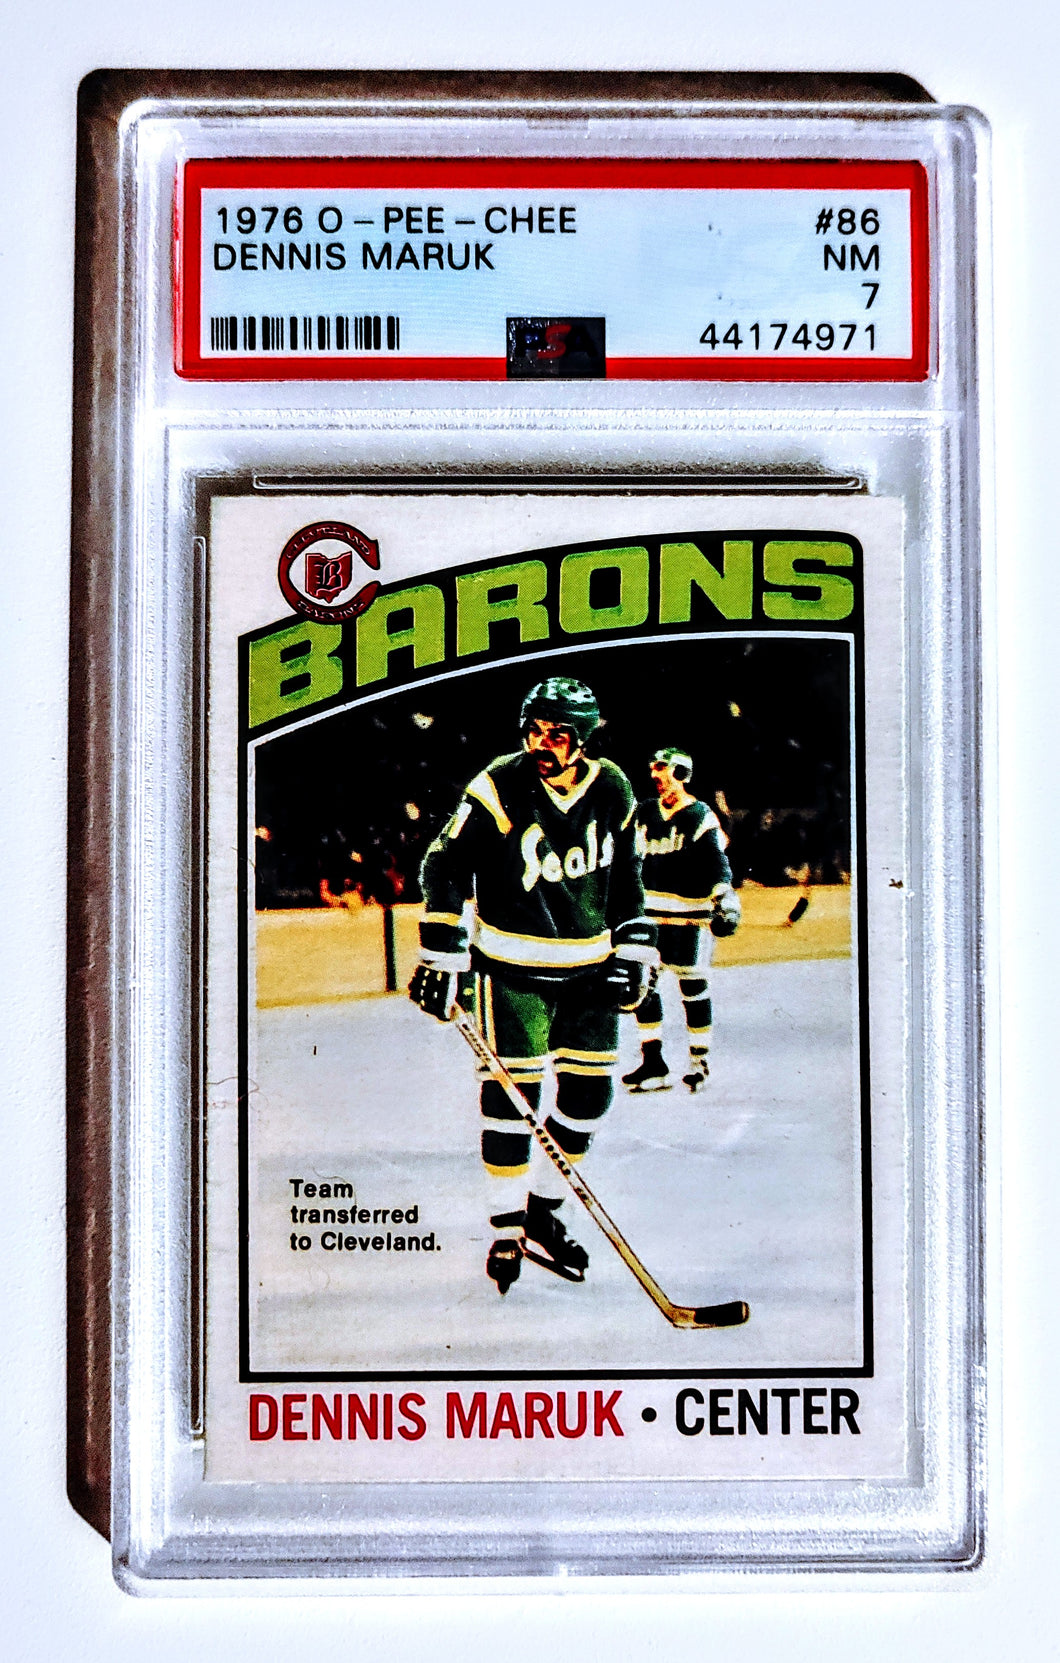 1976 O-Pee-Chee NHL Hockey Card; Dennis Maruk, Cleveland Barons, Card # 86; Near Mint (NM), Graded PSA 7